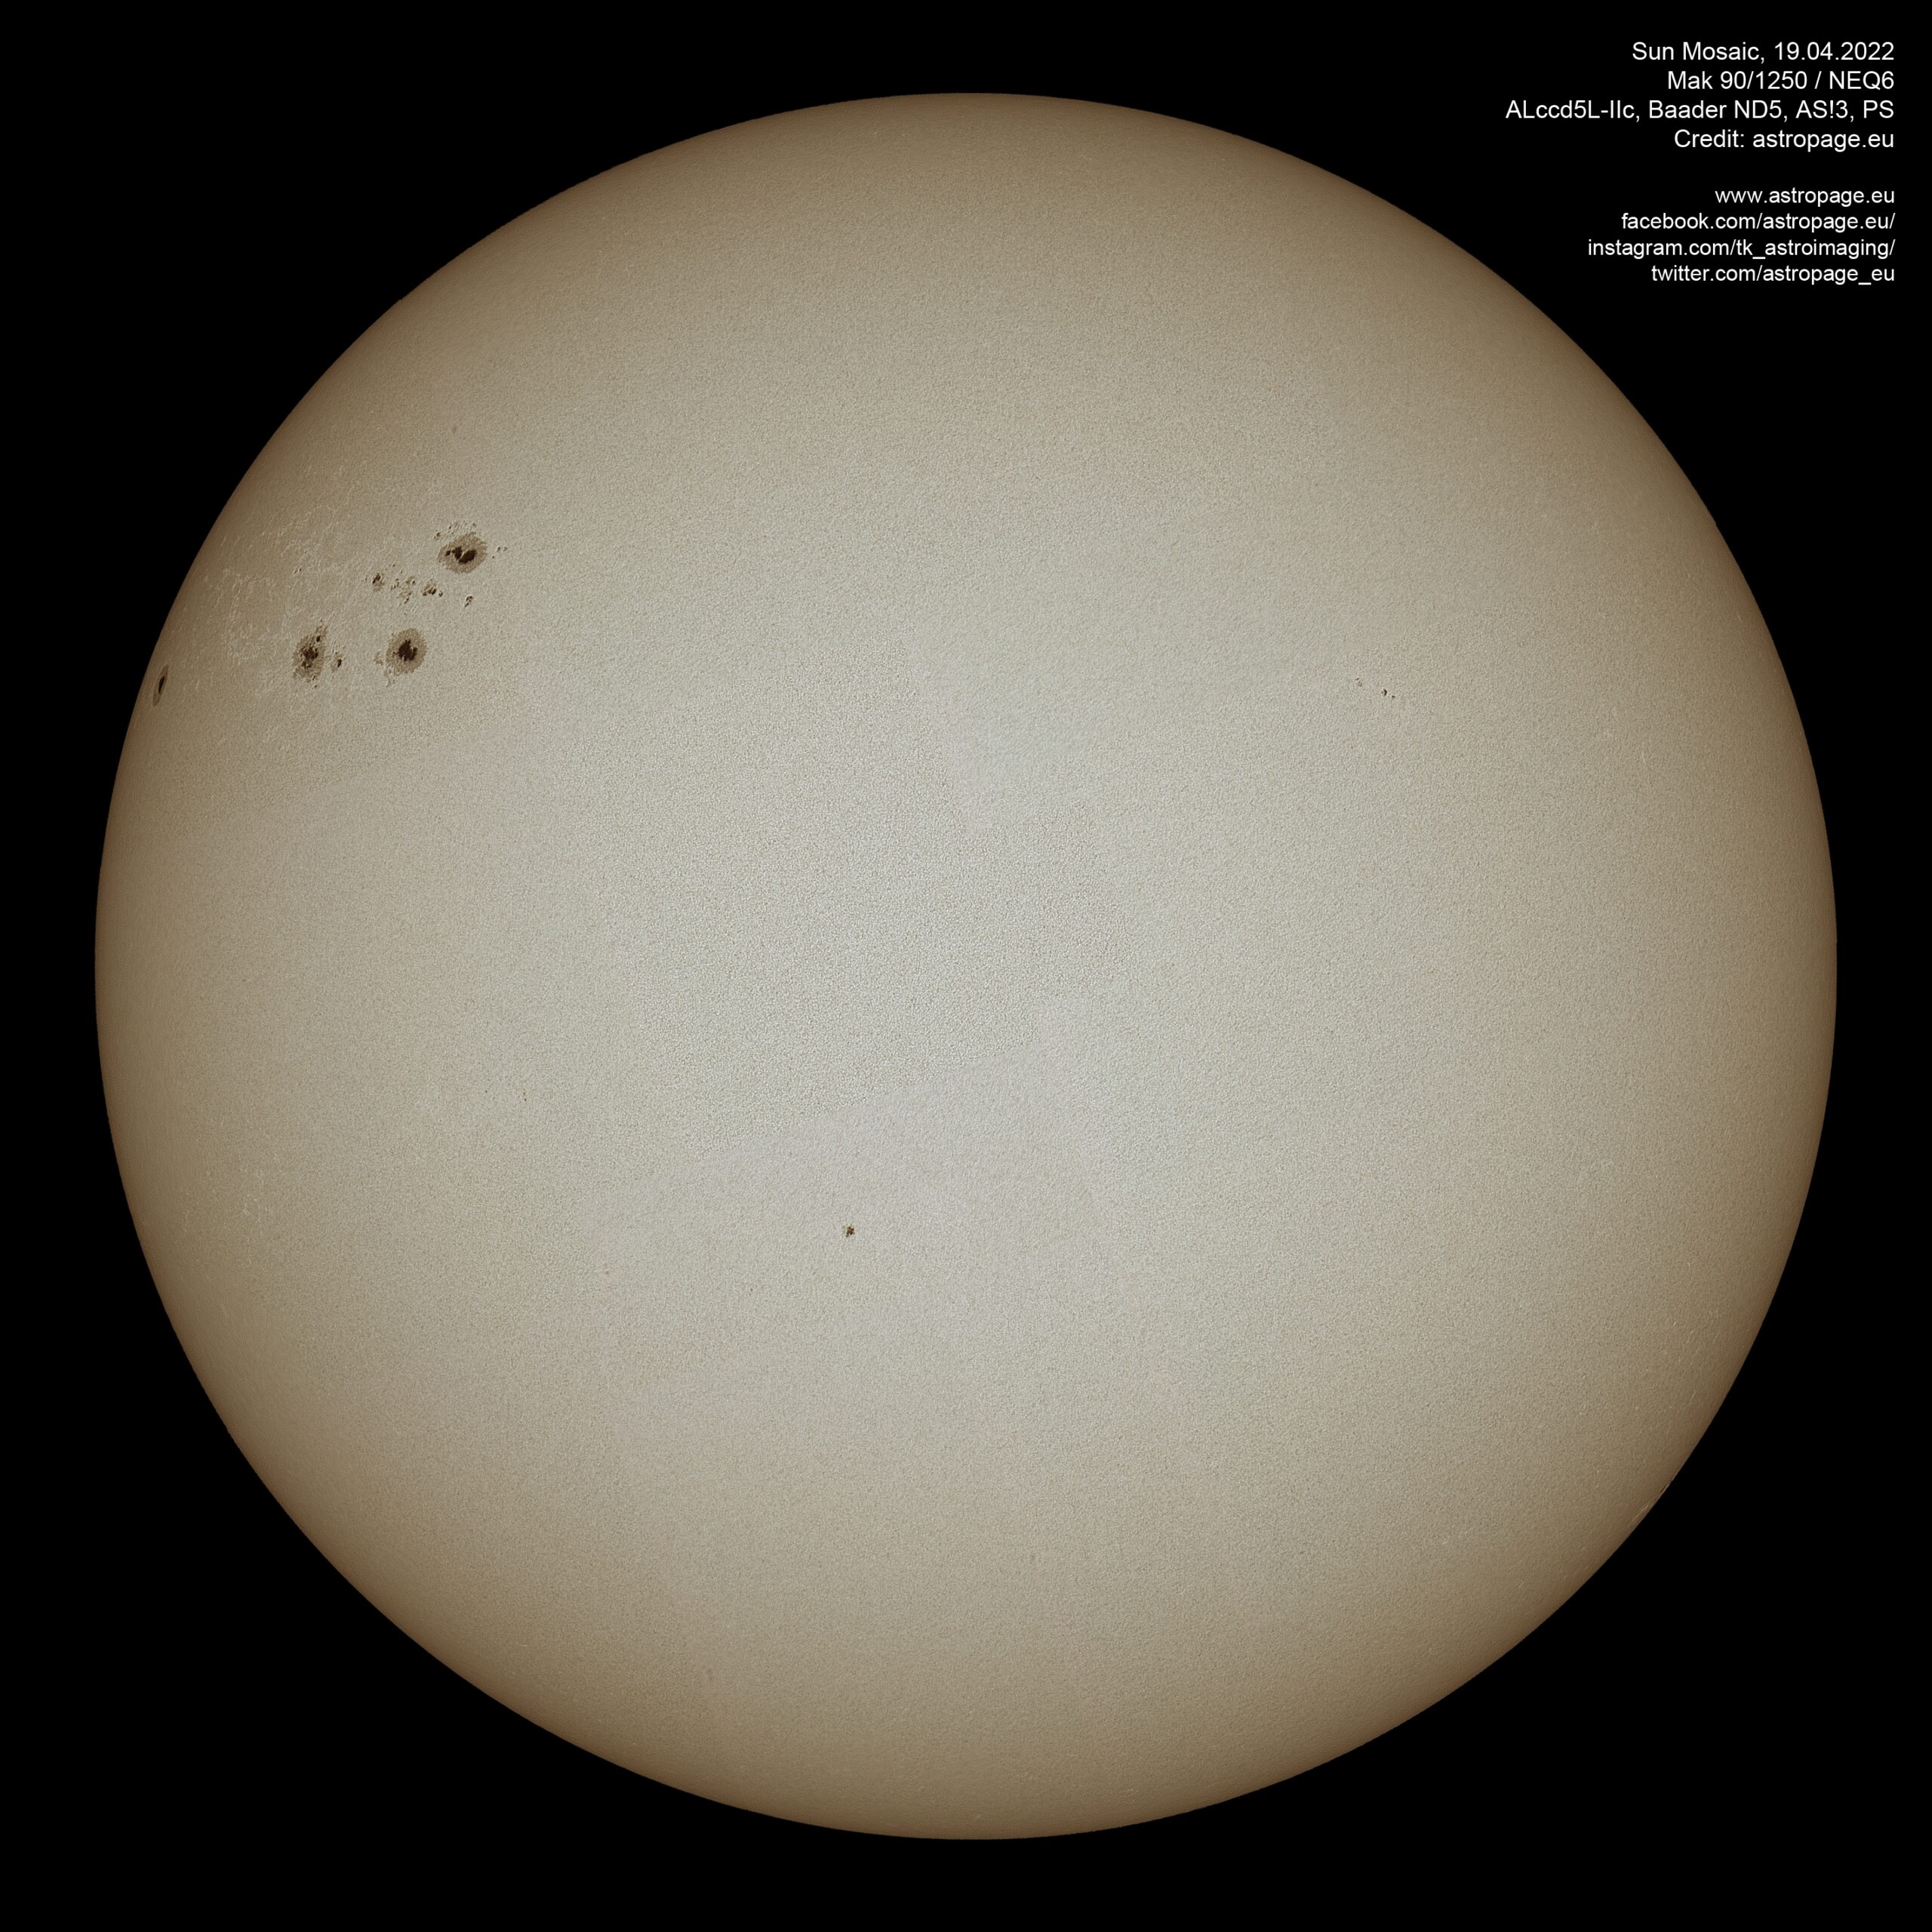 Sonnenmosaik vom 19. April 2022. (Credits: astropage.eu)